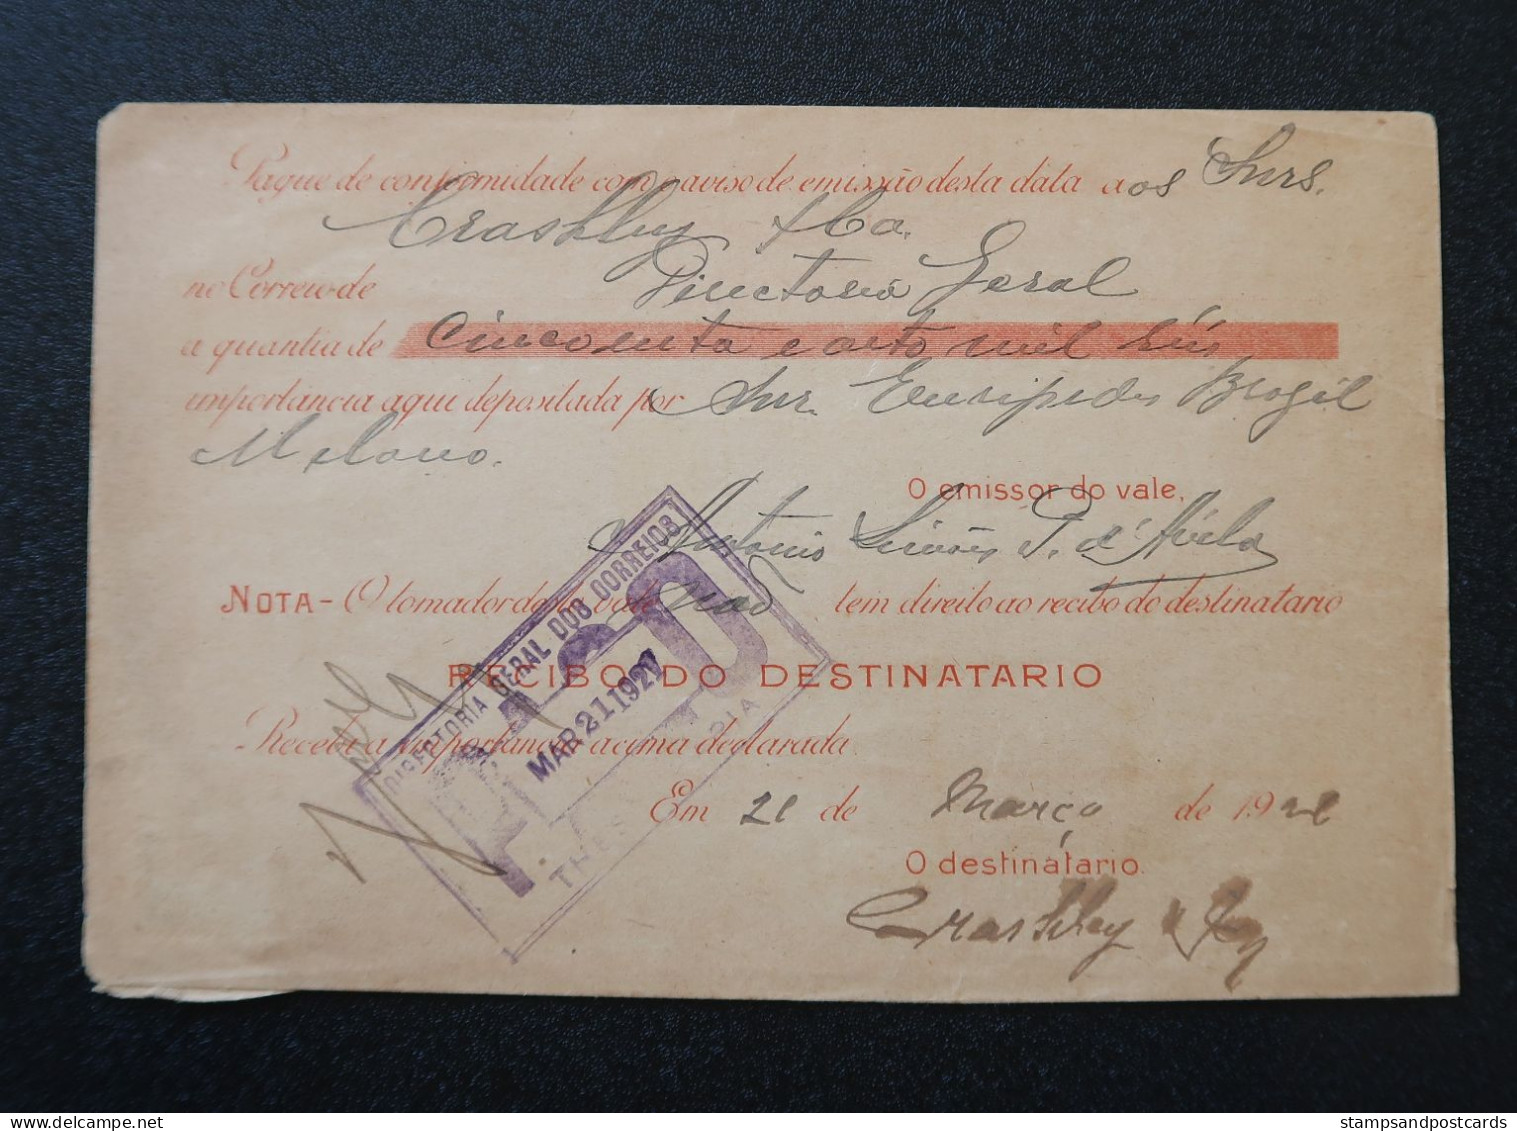 Brèsil Brasil Mandat Vale Postal 1921 Alegrete Rio Grande Do Sul Timbre Fiscal Deposito Brazil Money Order Revenue Stamp - Covers & Documents